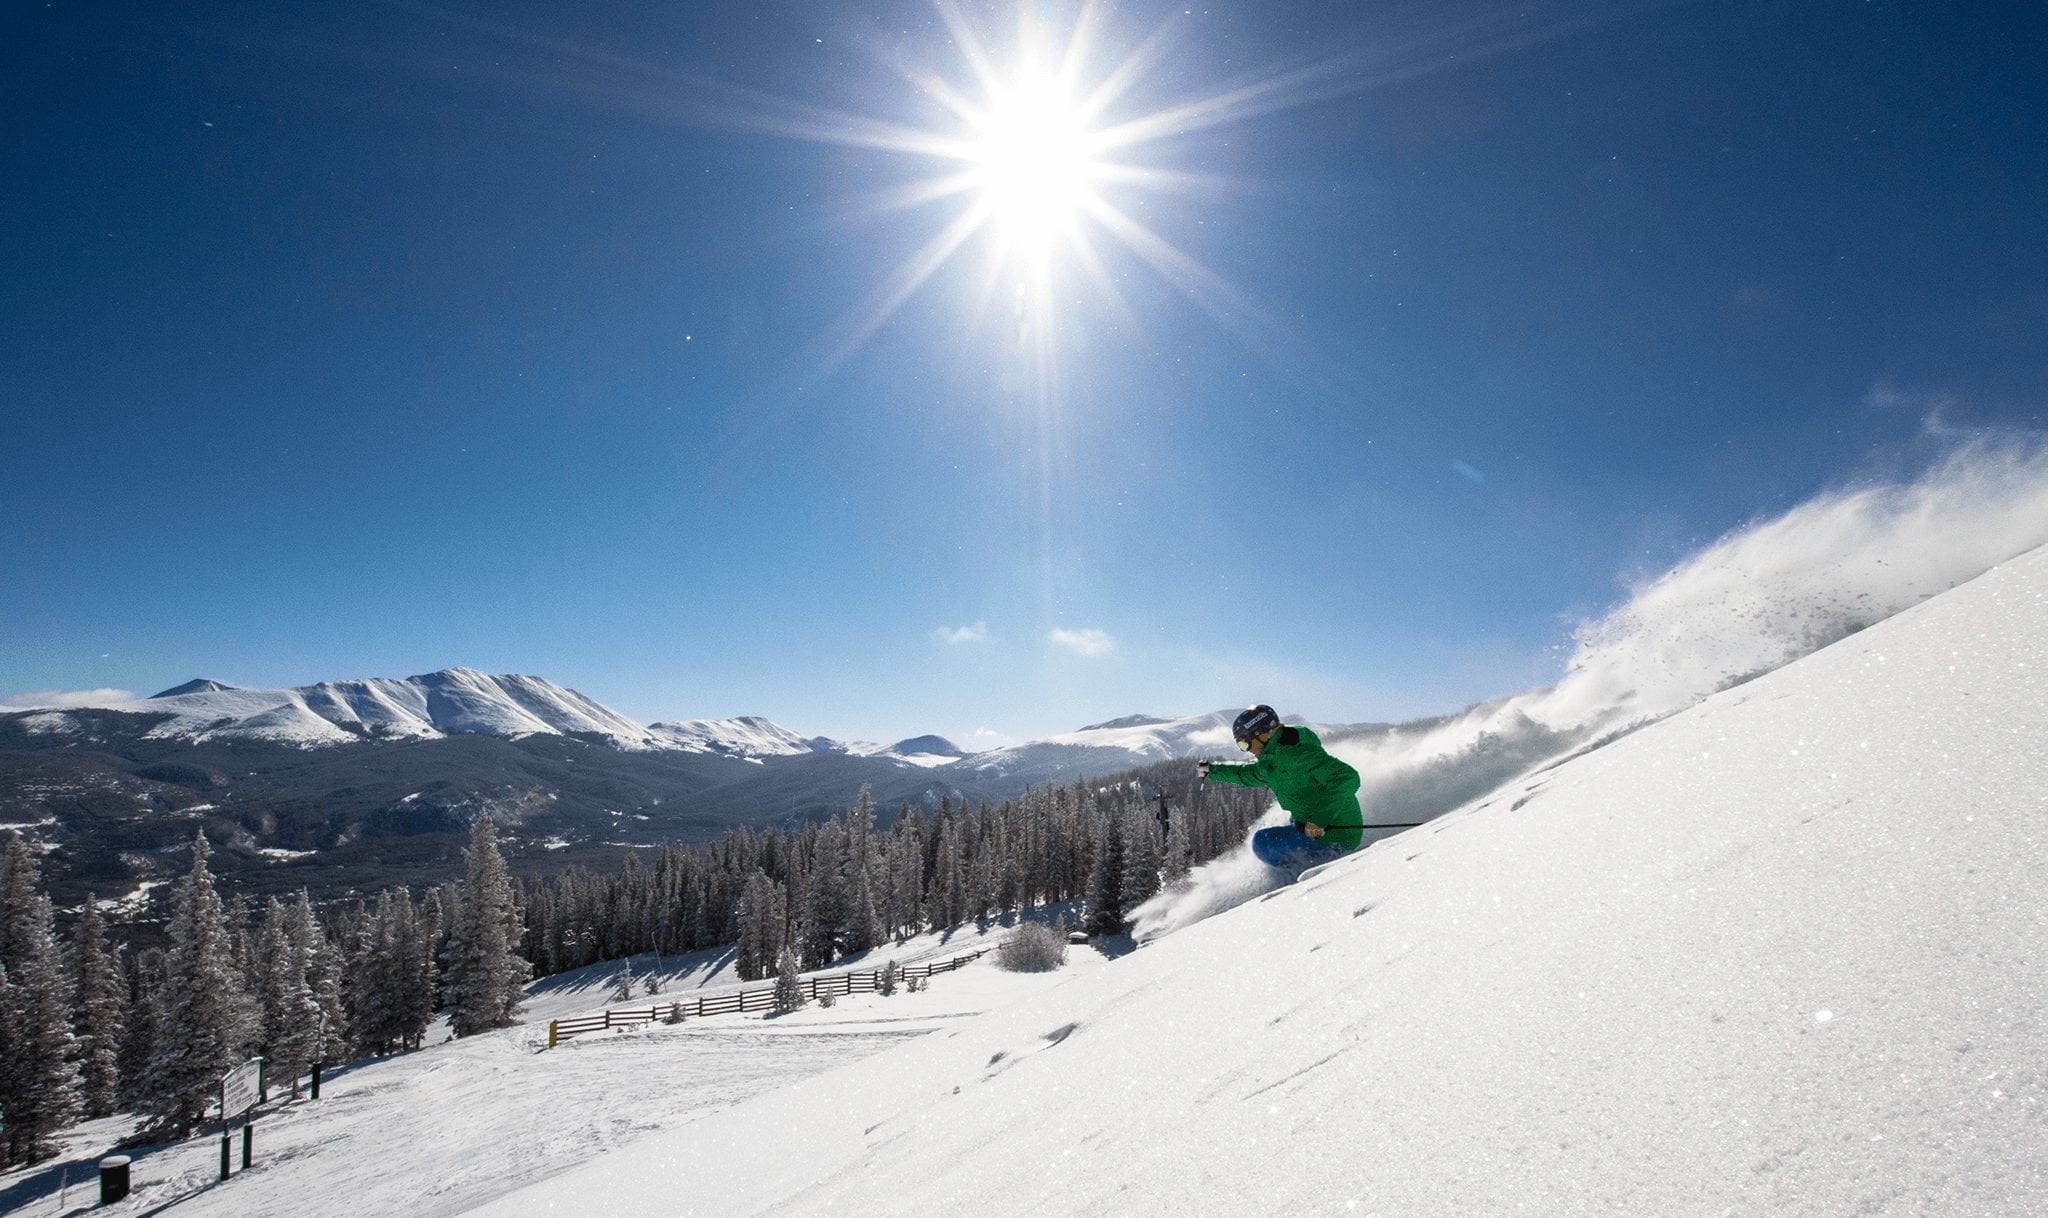 A skier on fresh powder during a beautiful day at the Breckenridge Ski Resort